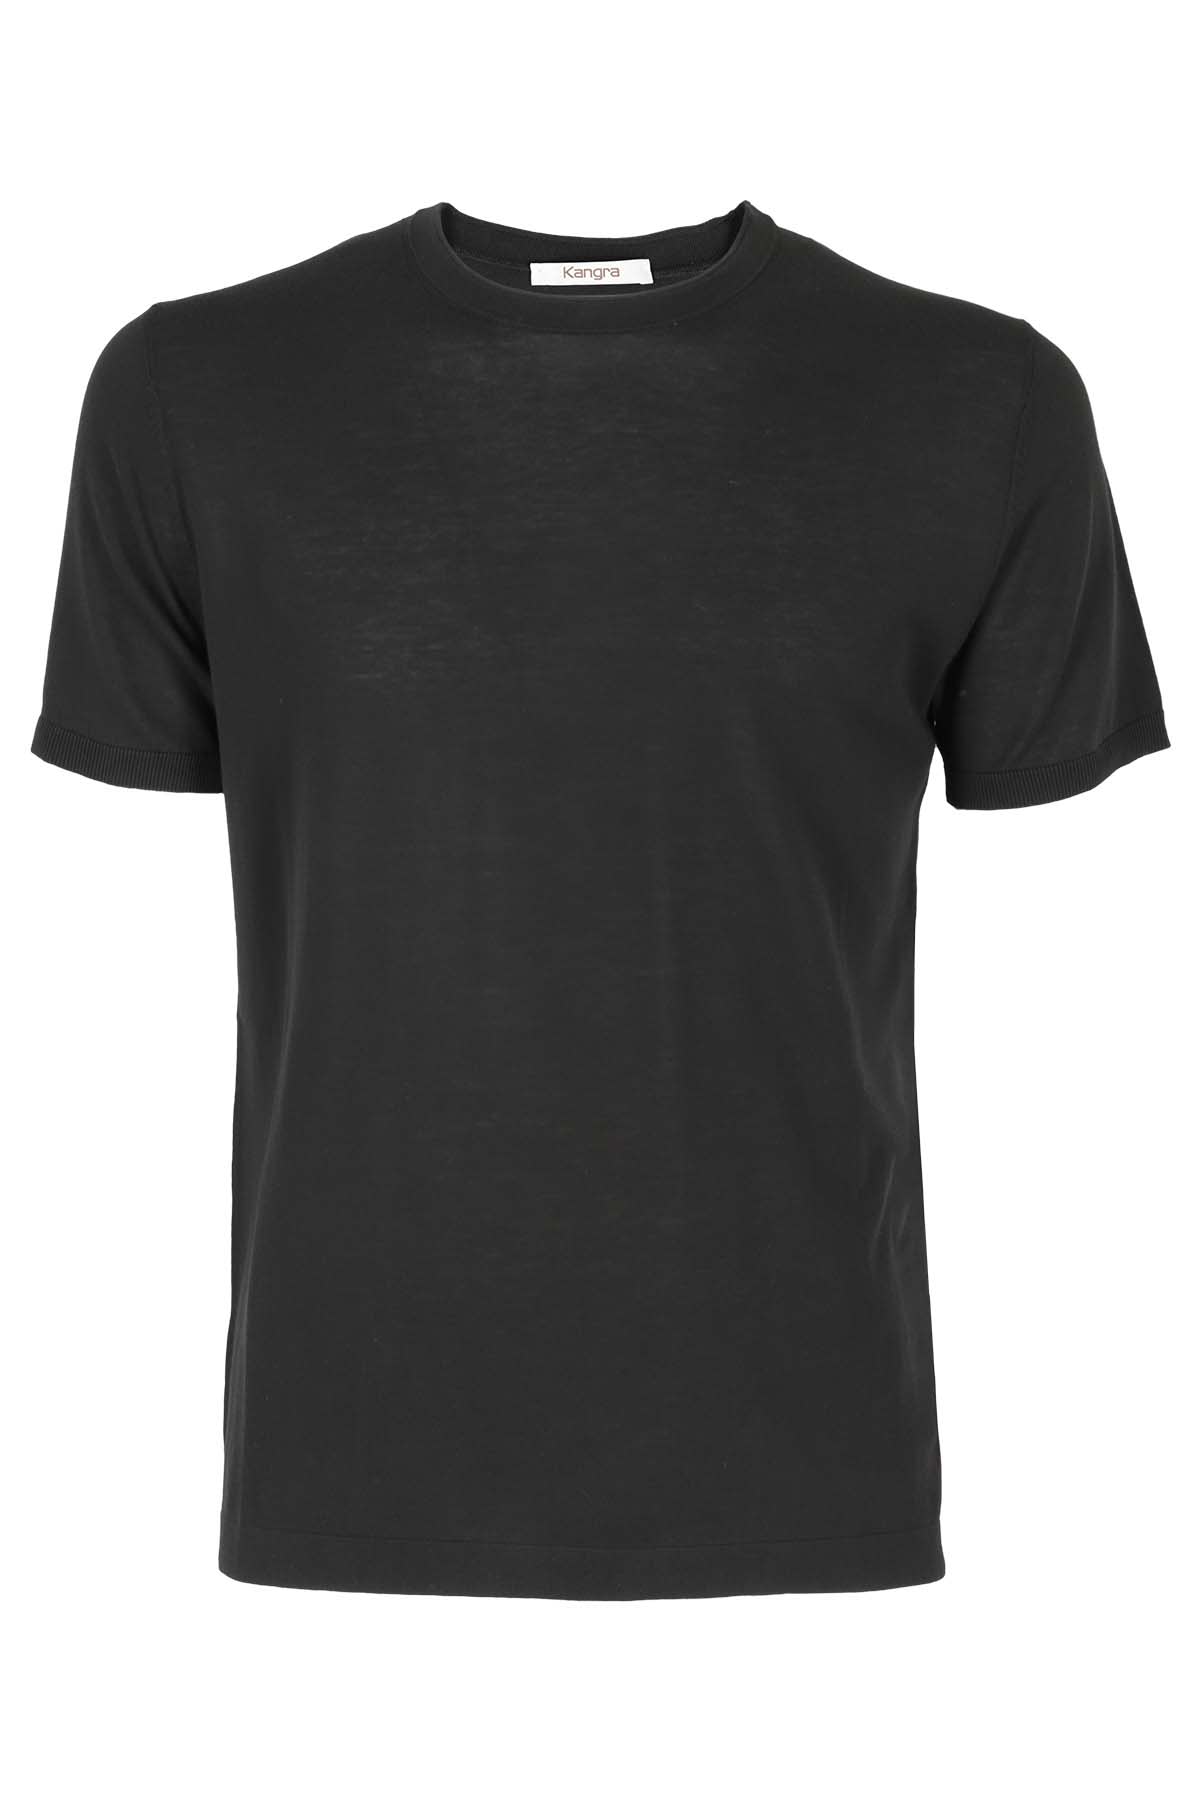 Kangra T-Shirt